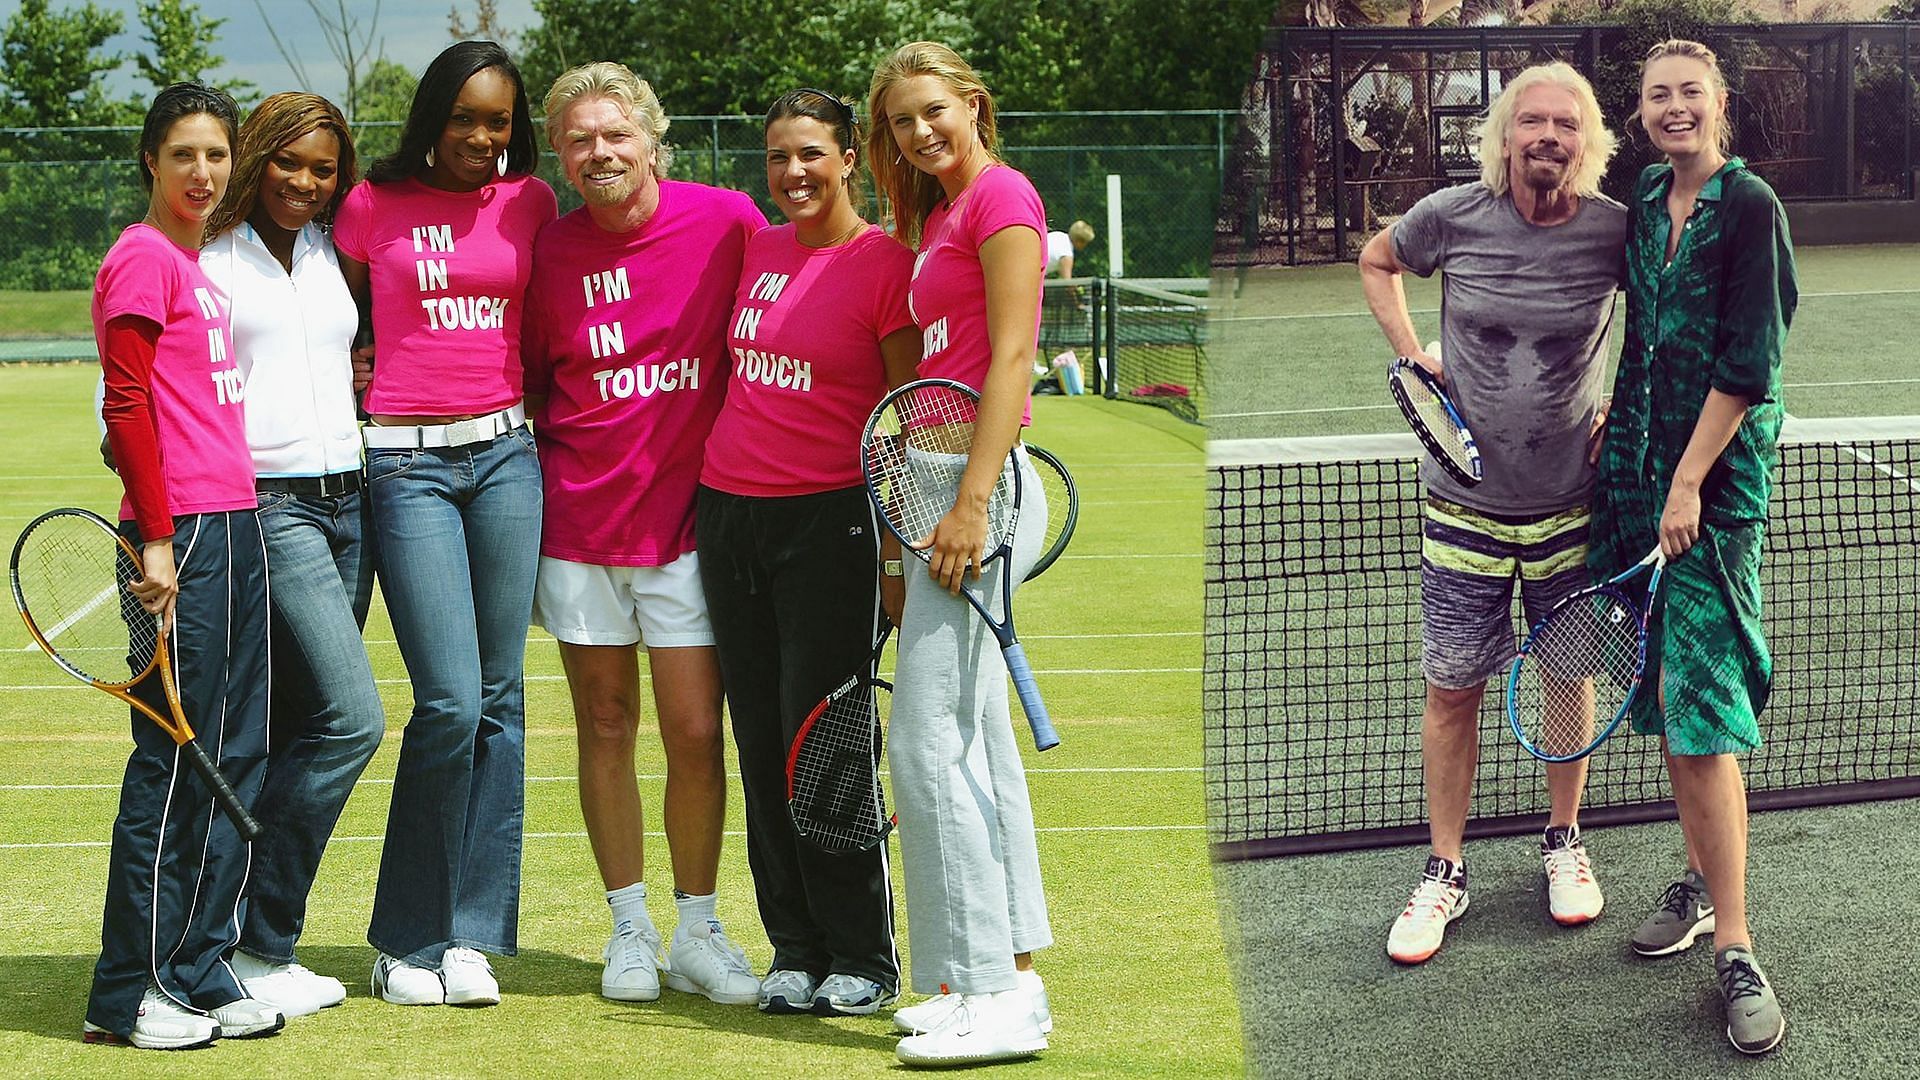 Richard Branson recalls playing tennis with Maria Sharapova and Serena and Venus Williams